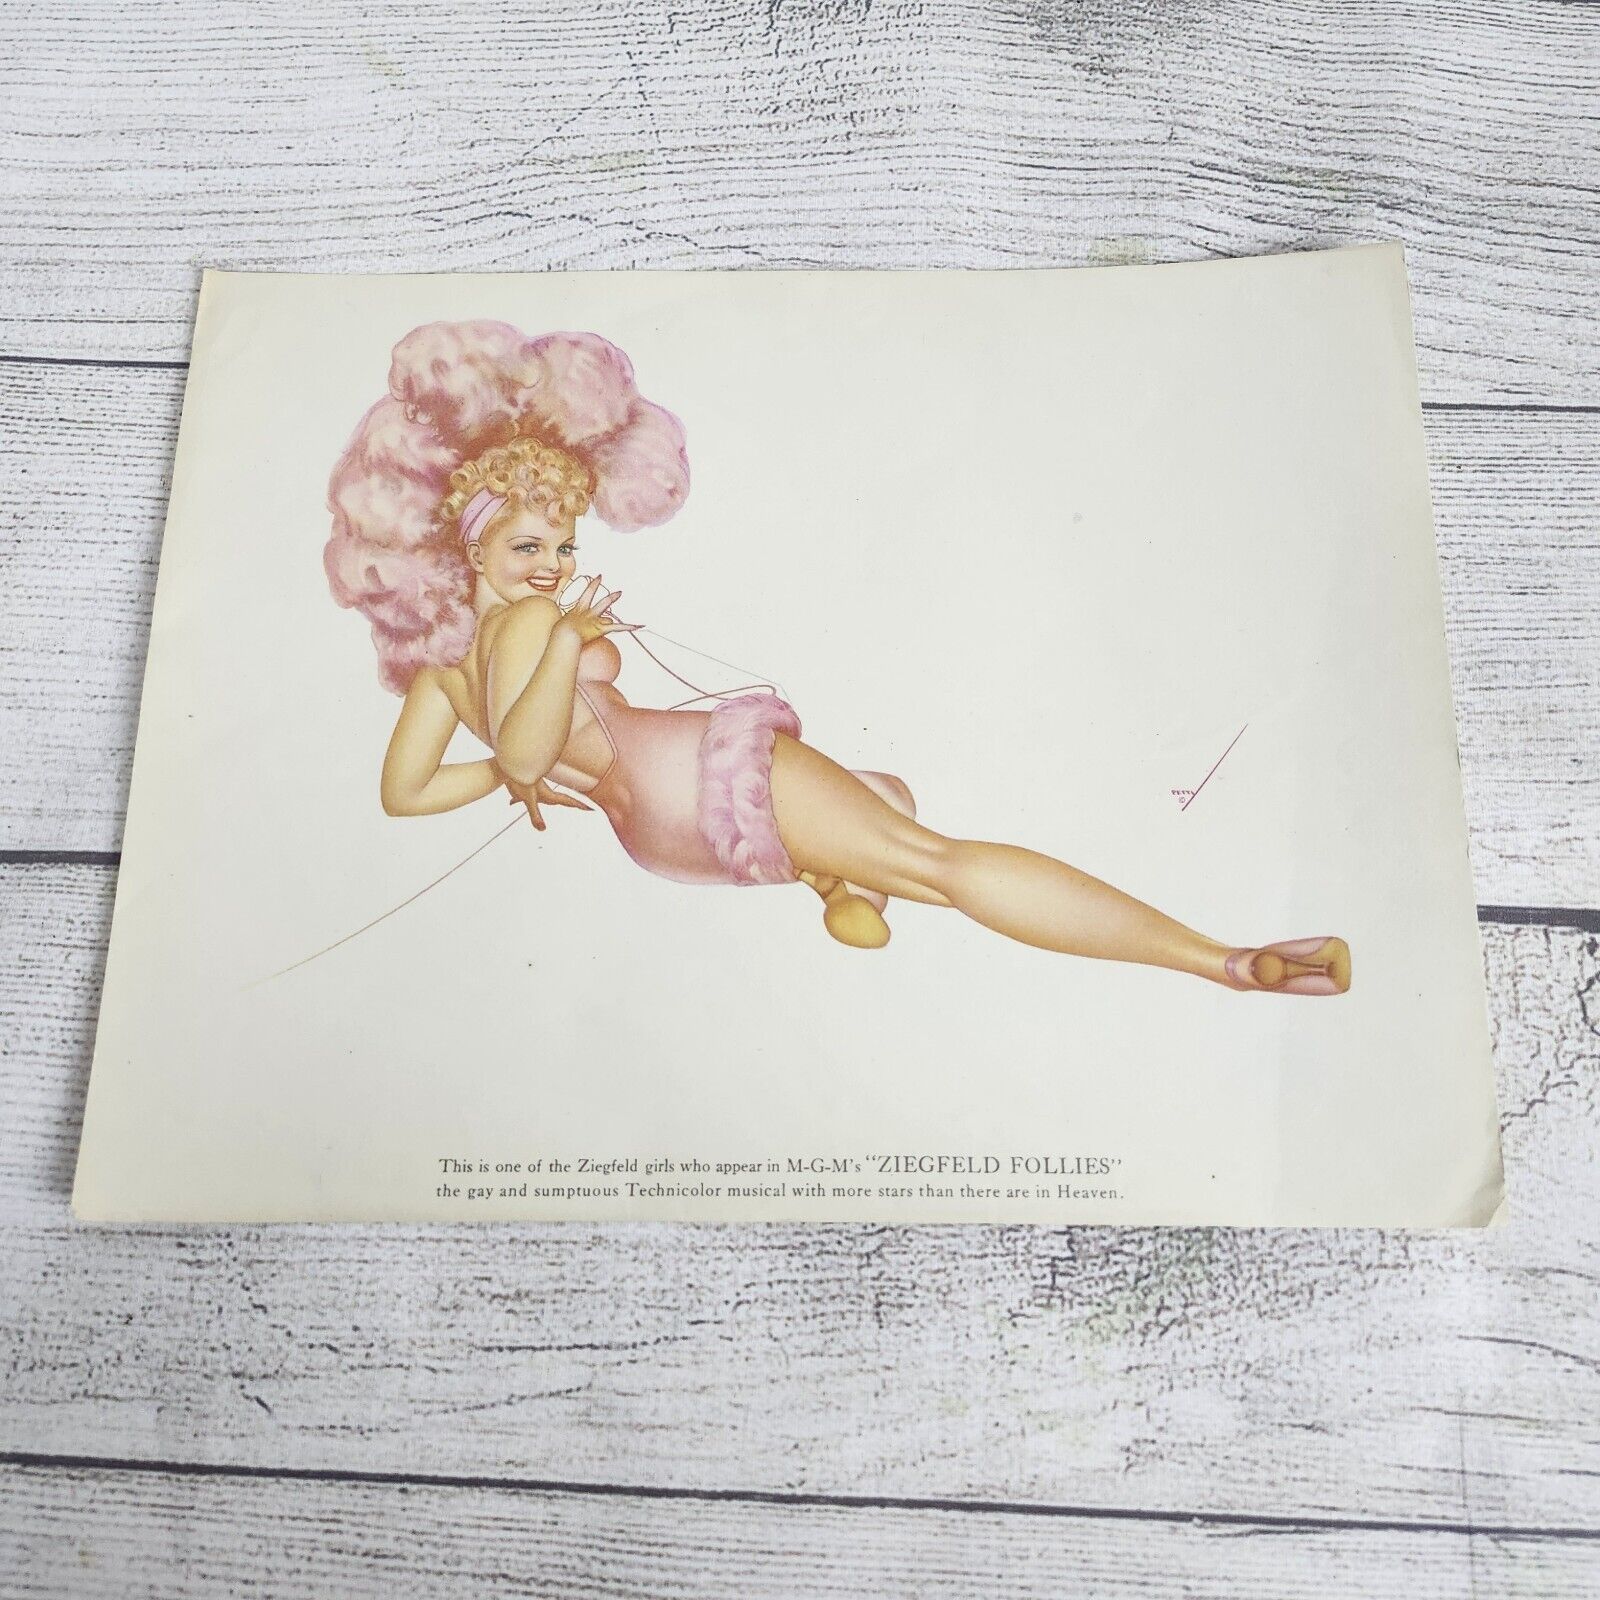 Vtg 1940s George Petty Ziegfeld Follies Pinup Girl Art Print 8.5x11 Lucille Ball